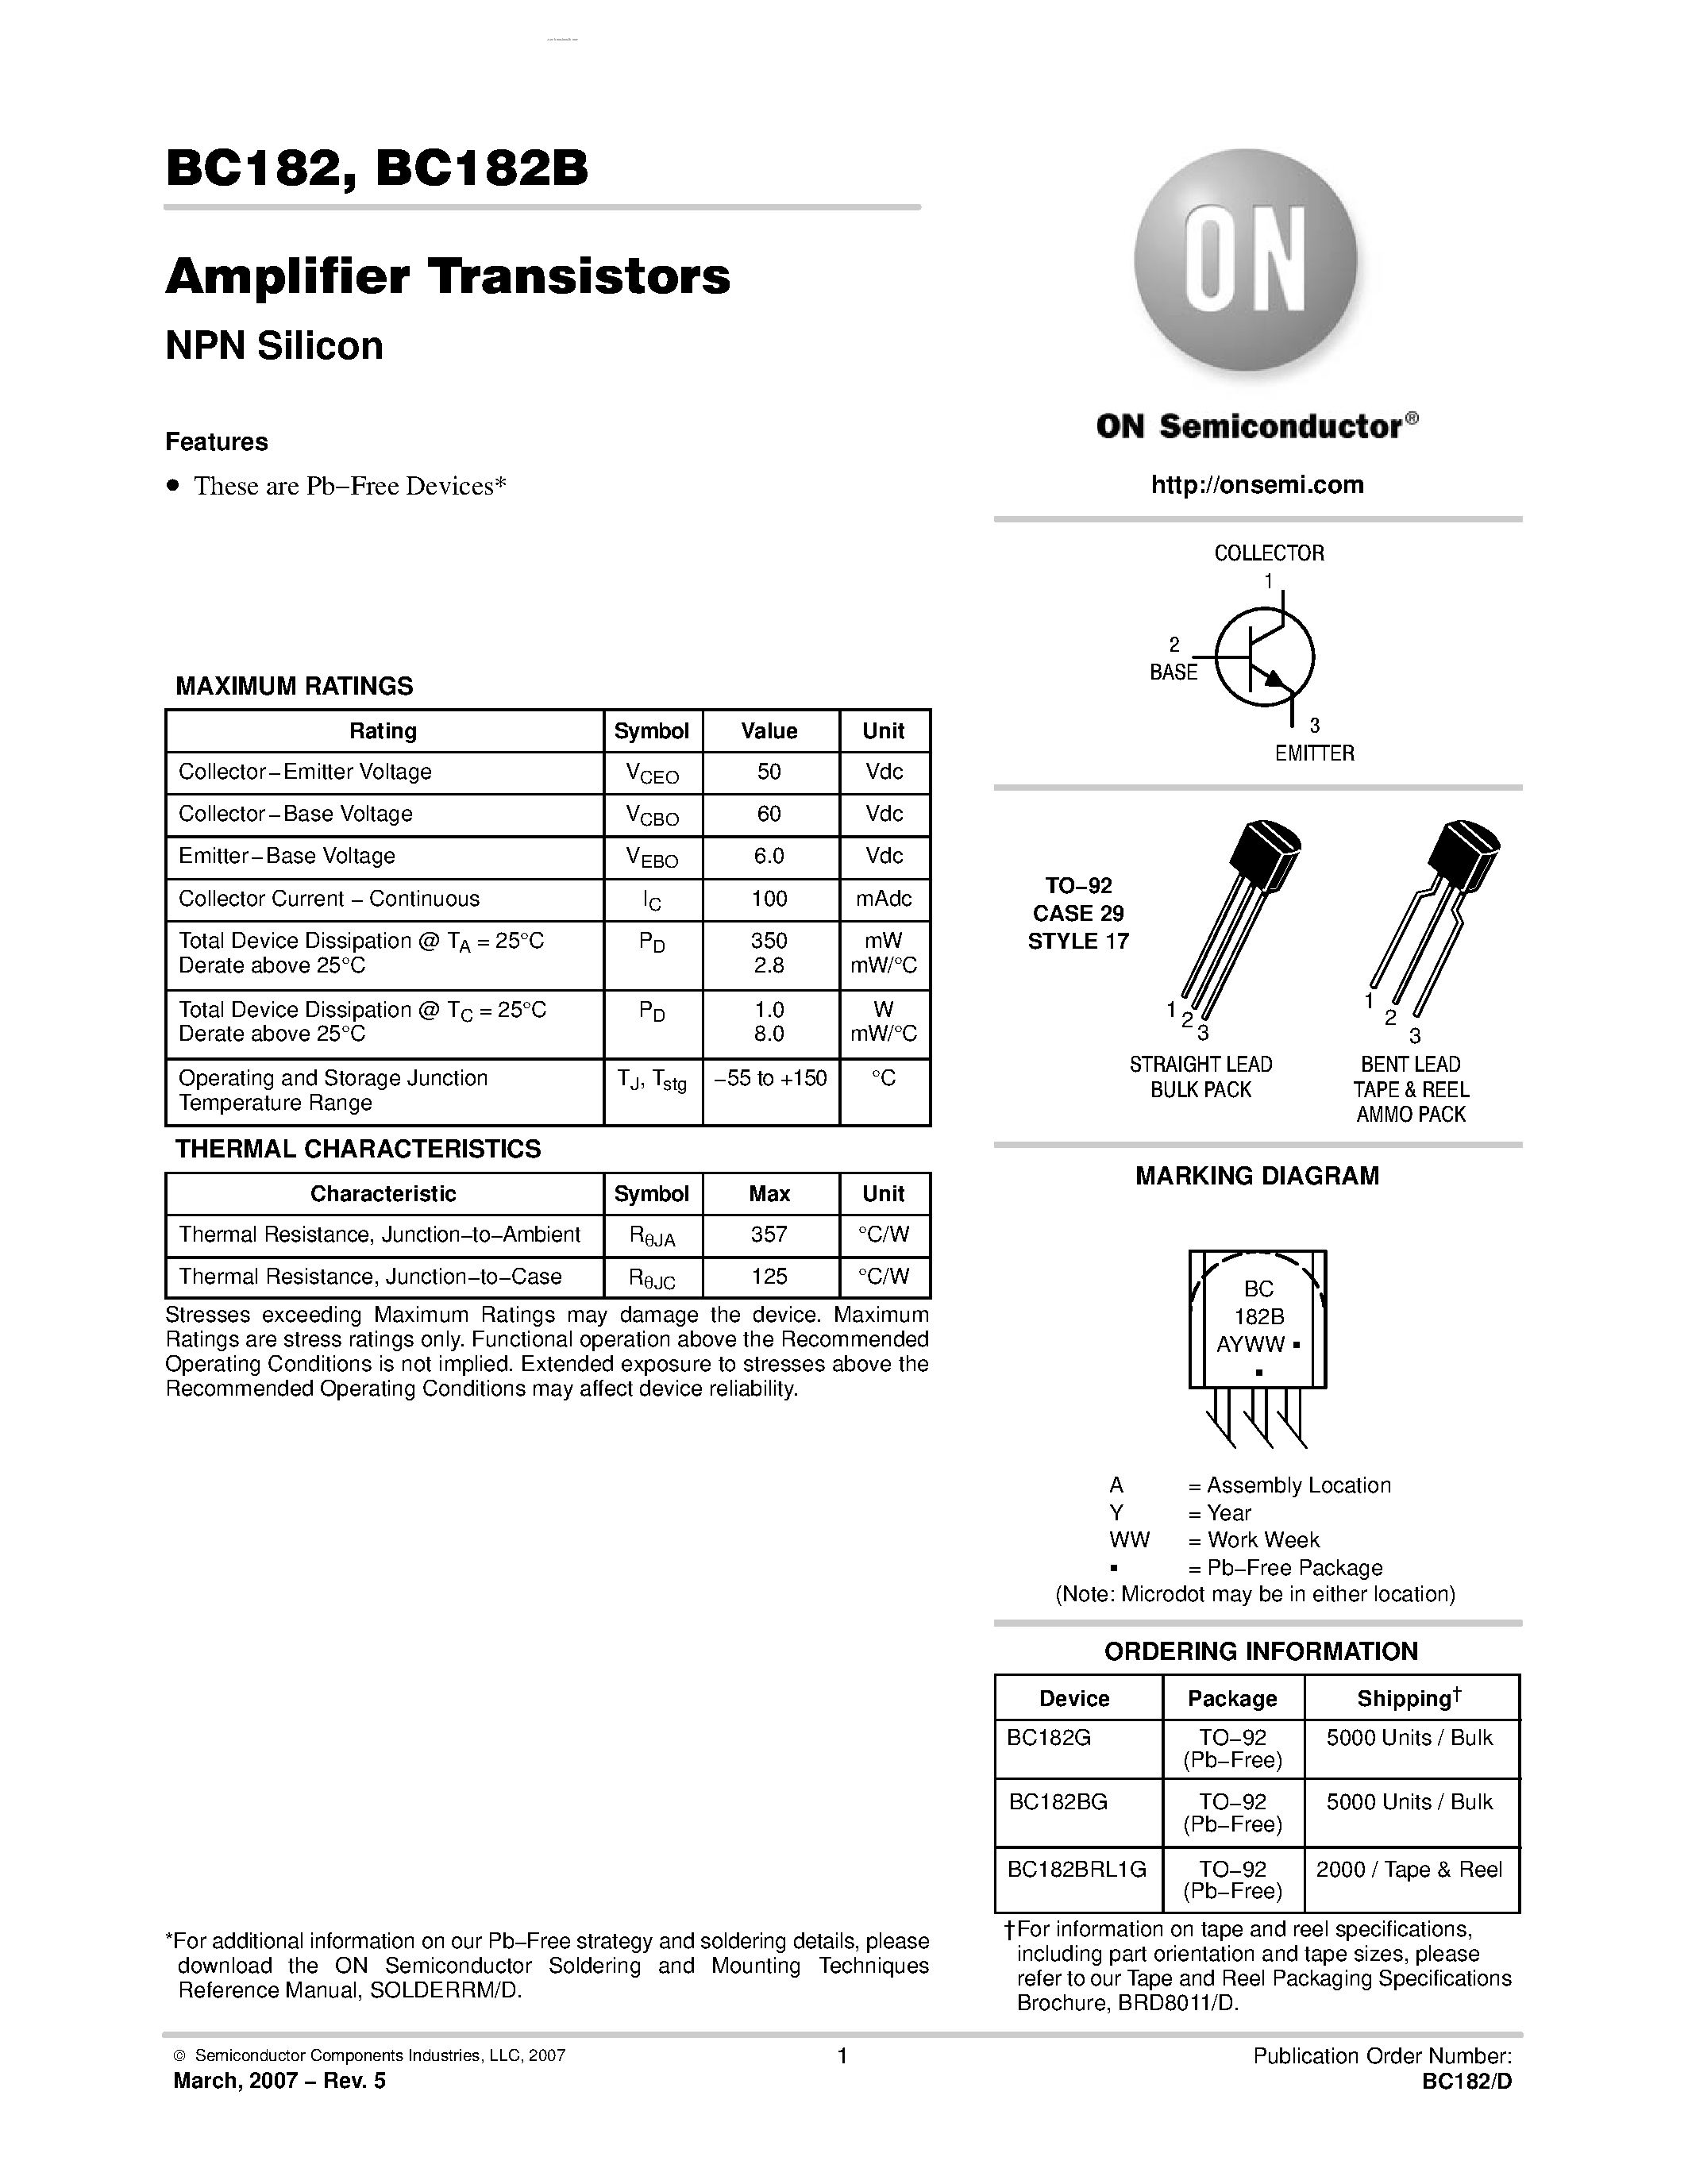 Даташит BC182B - Amplifier Transistor страница 1